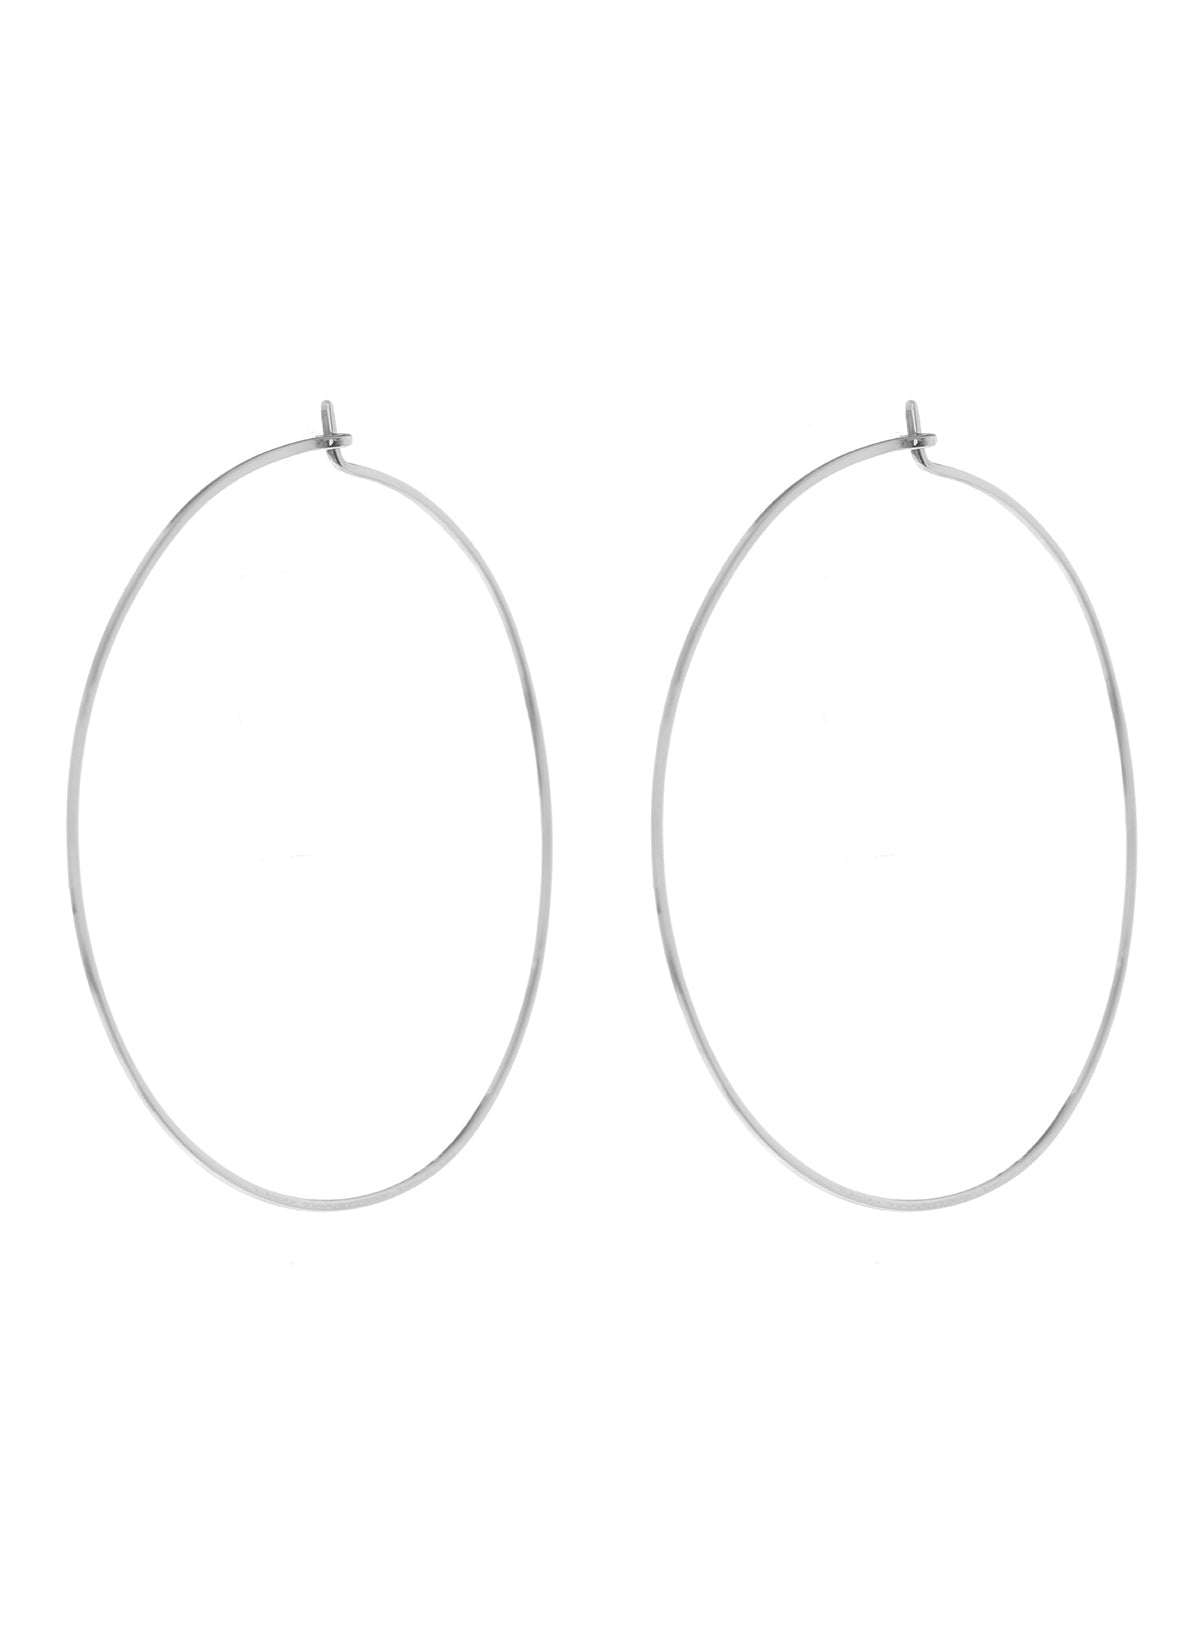 Luv Aj Capri Large Thin Wire Hoops Earrings in Polished Rhodium